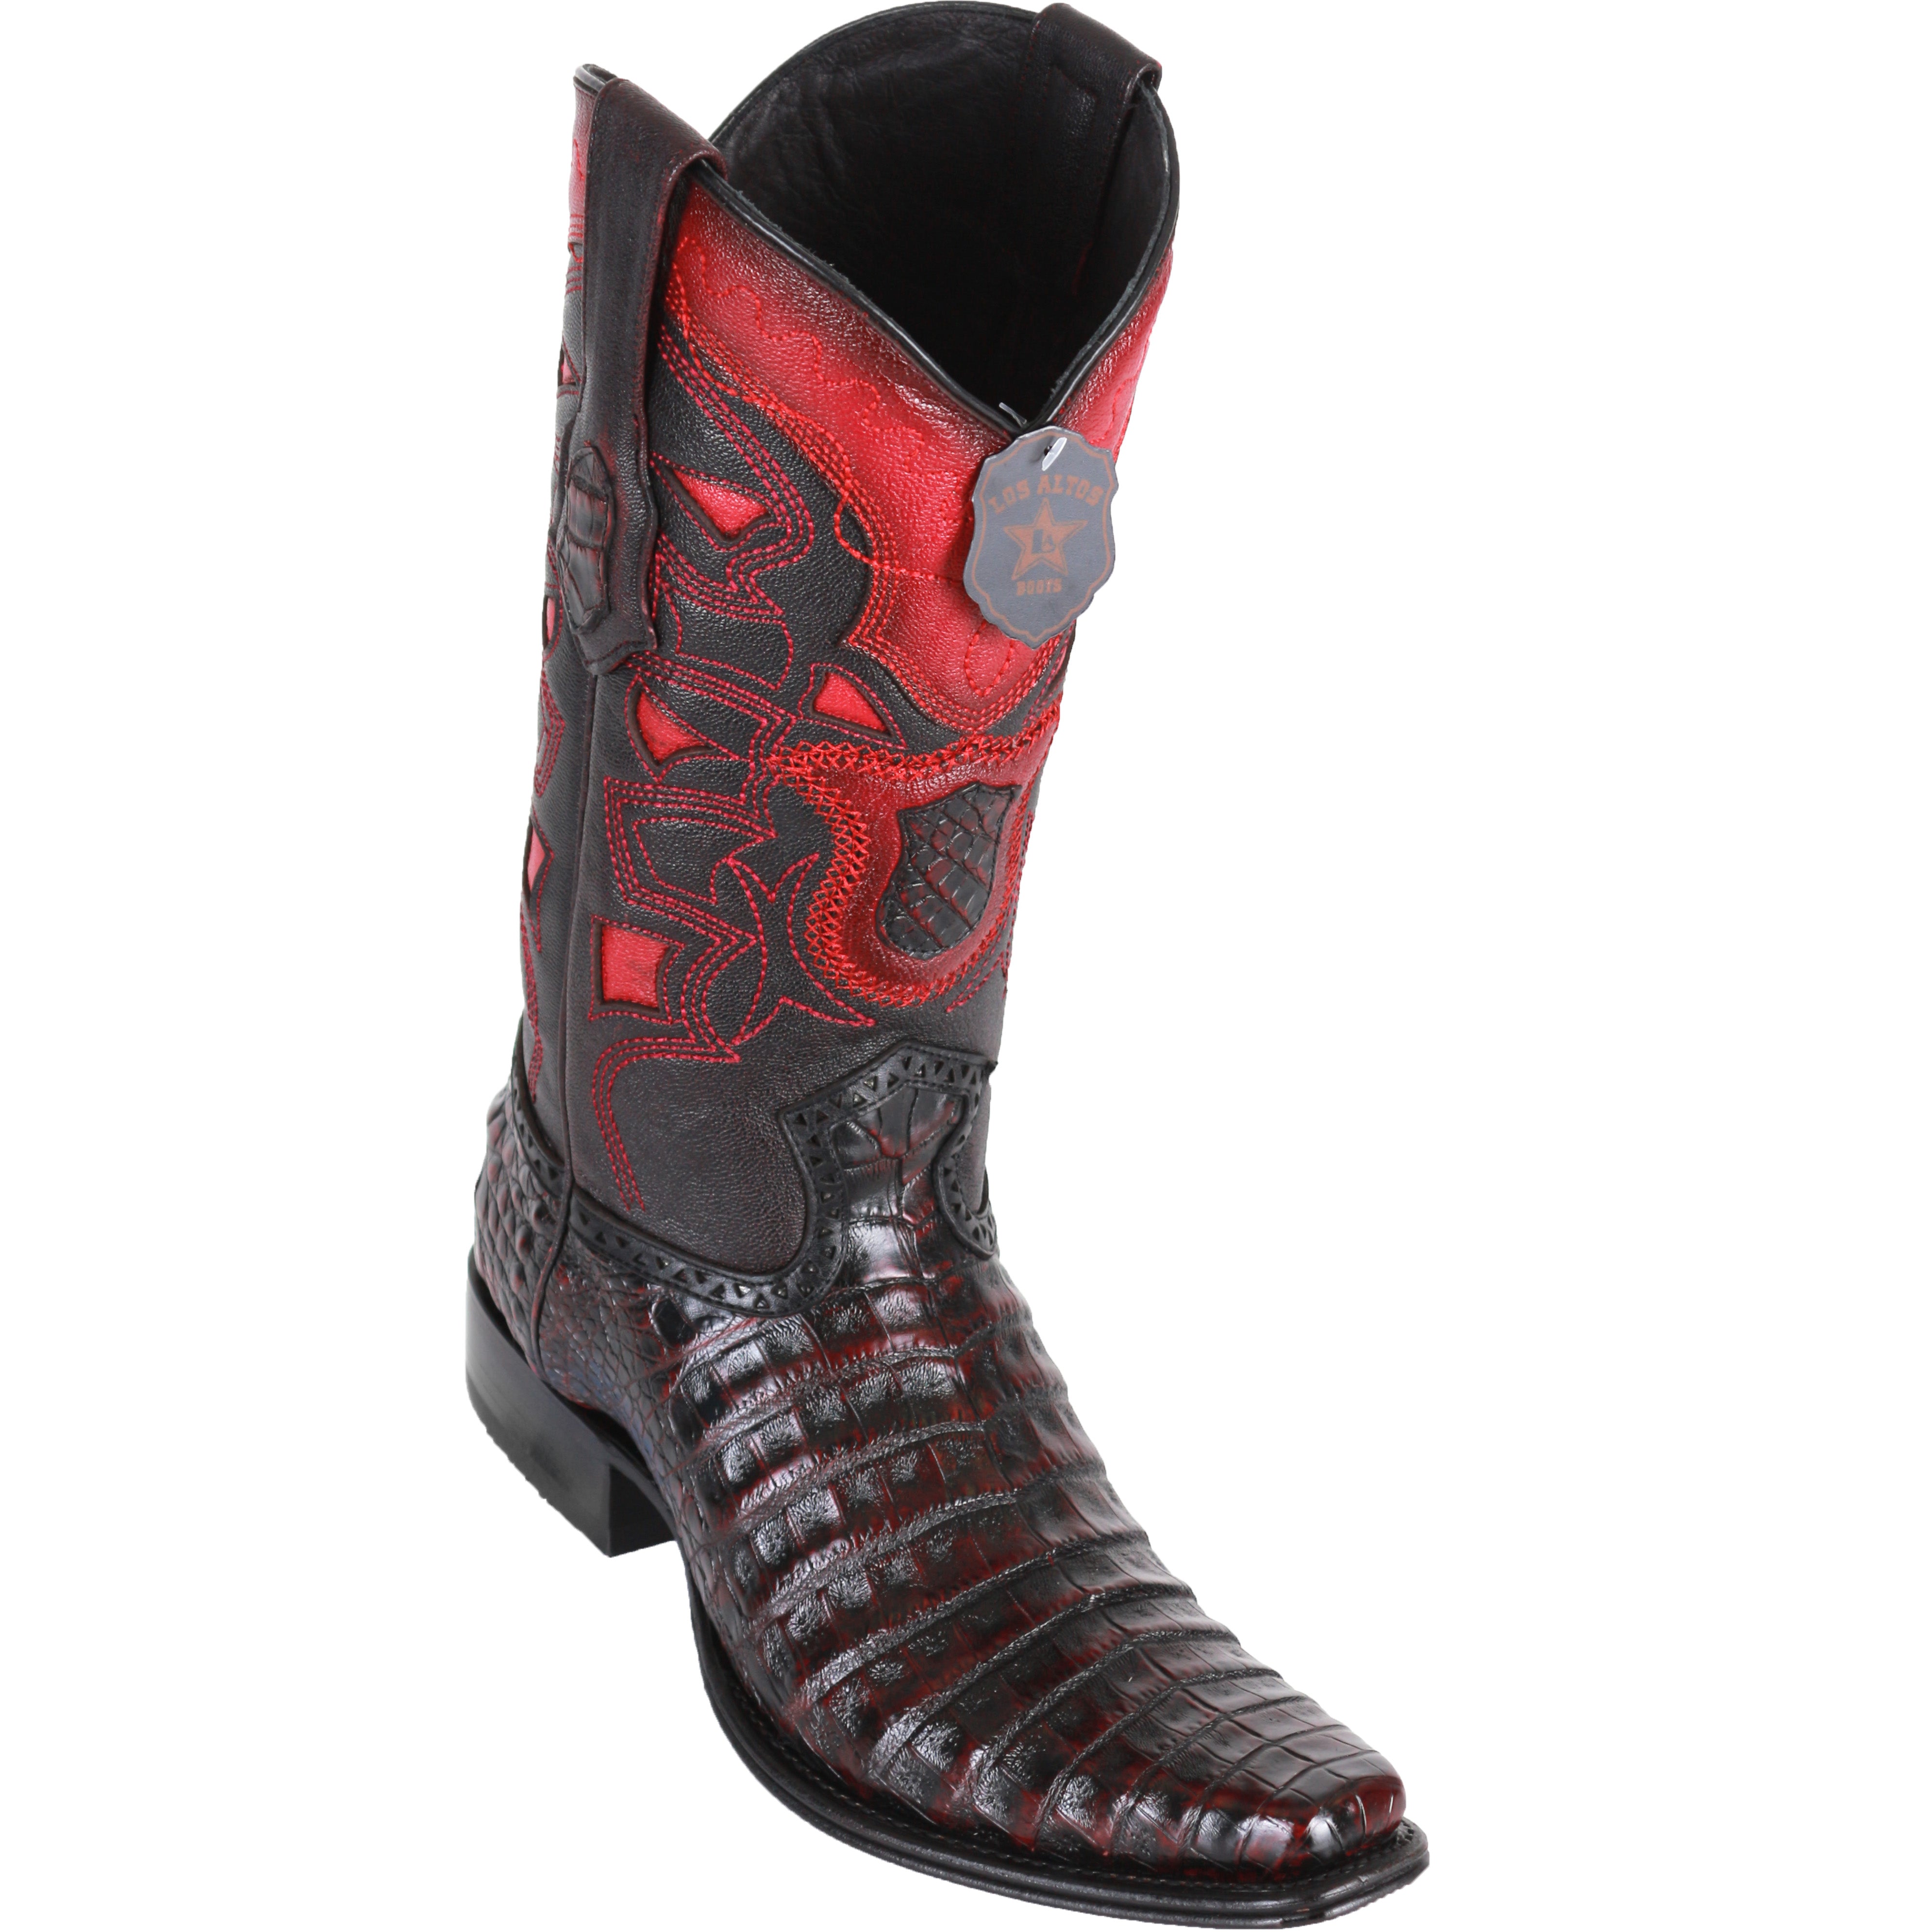 Los Altos Boots Caiman European Toe Cowboy Boots - Black Cherry